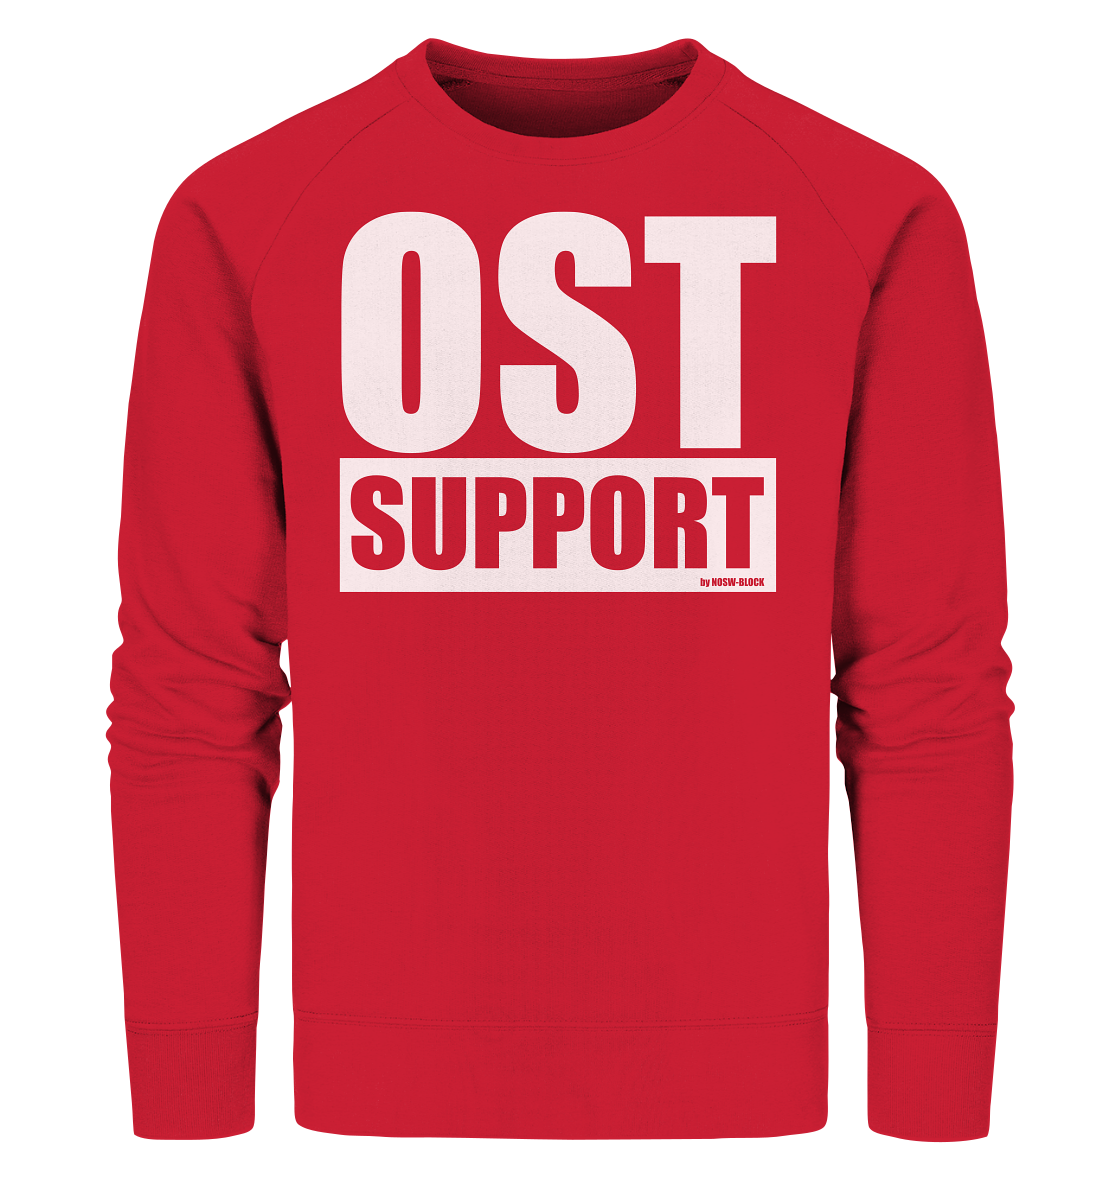 N.O.S.W. BLOCK Fanblock Sweater "OST SUPPORT" Männer Organic Sweatshirt rot